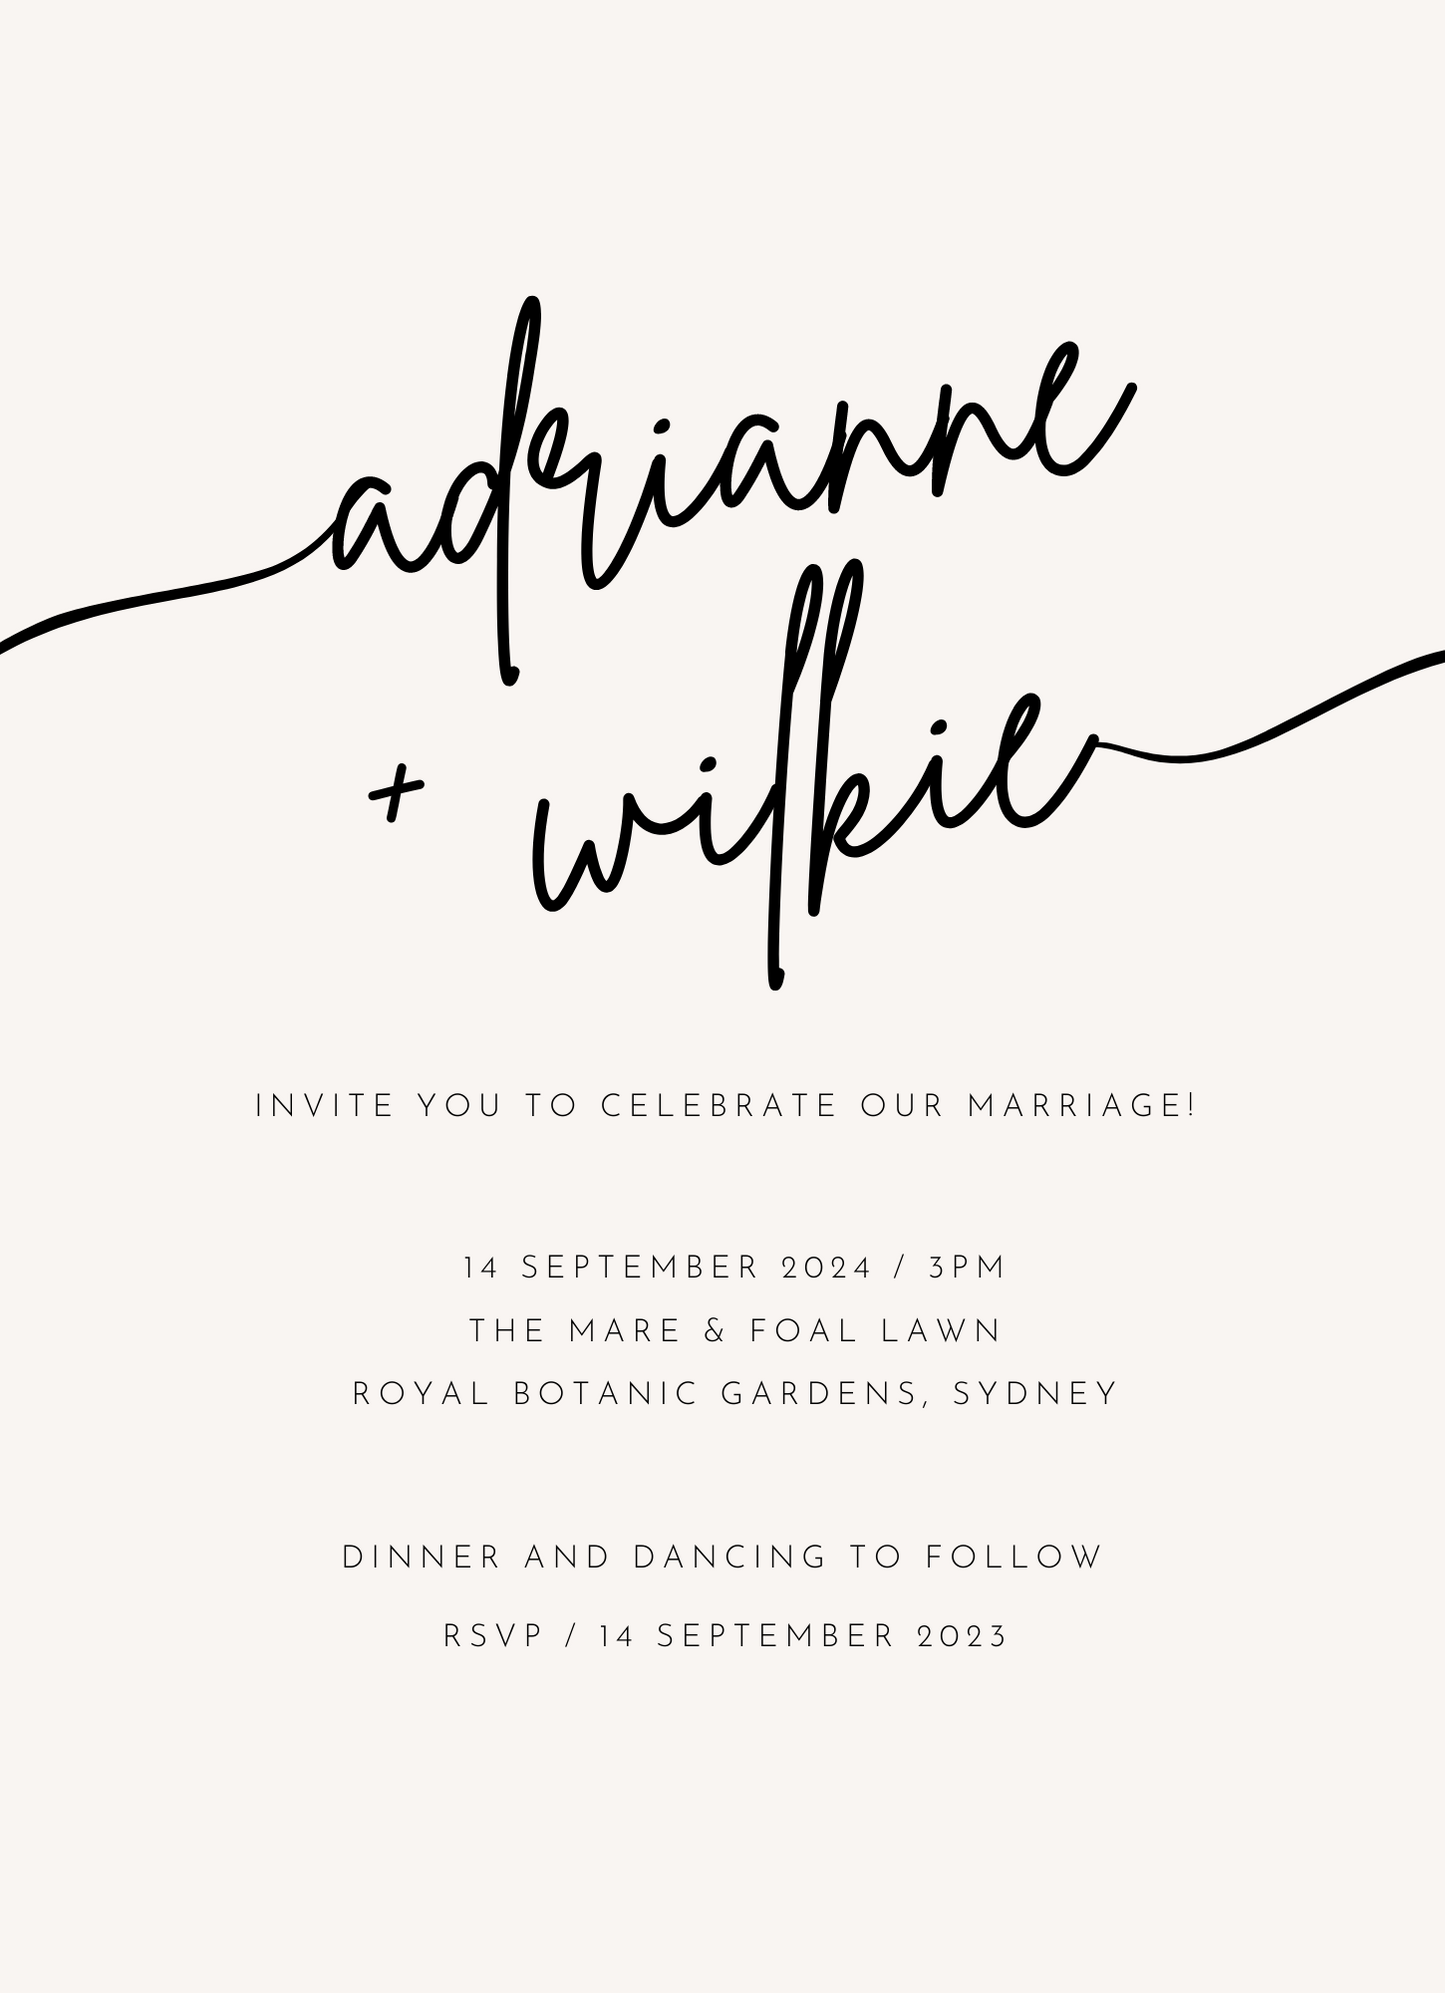 Wedding Invitations - Design and Prints